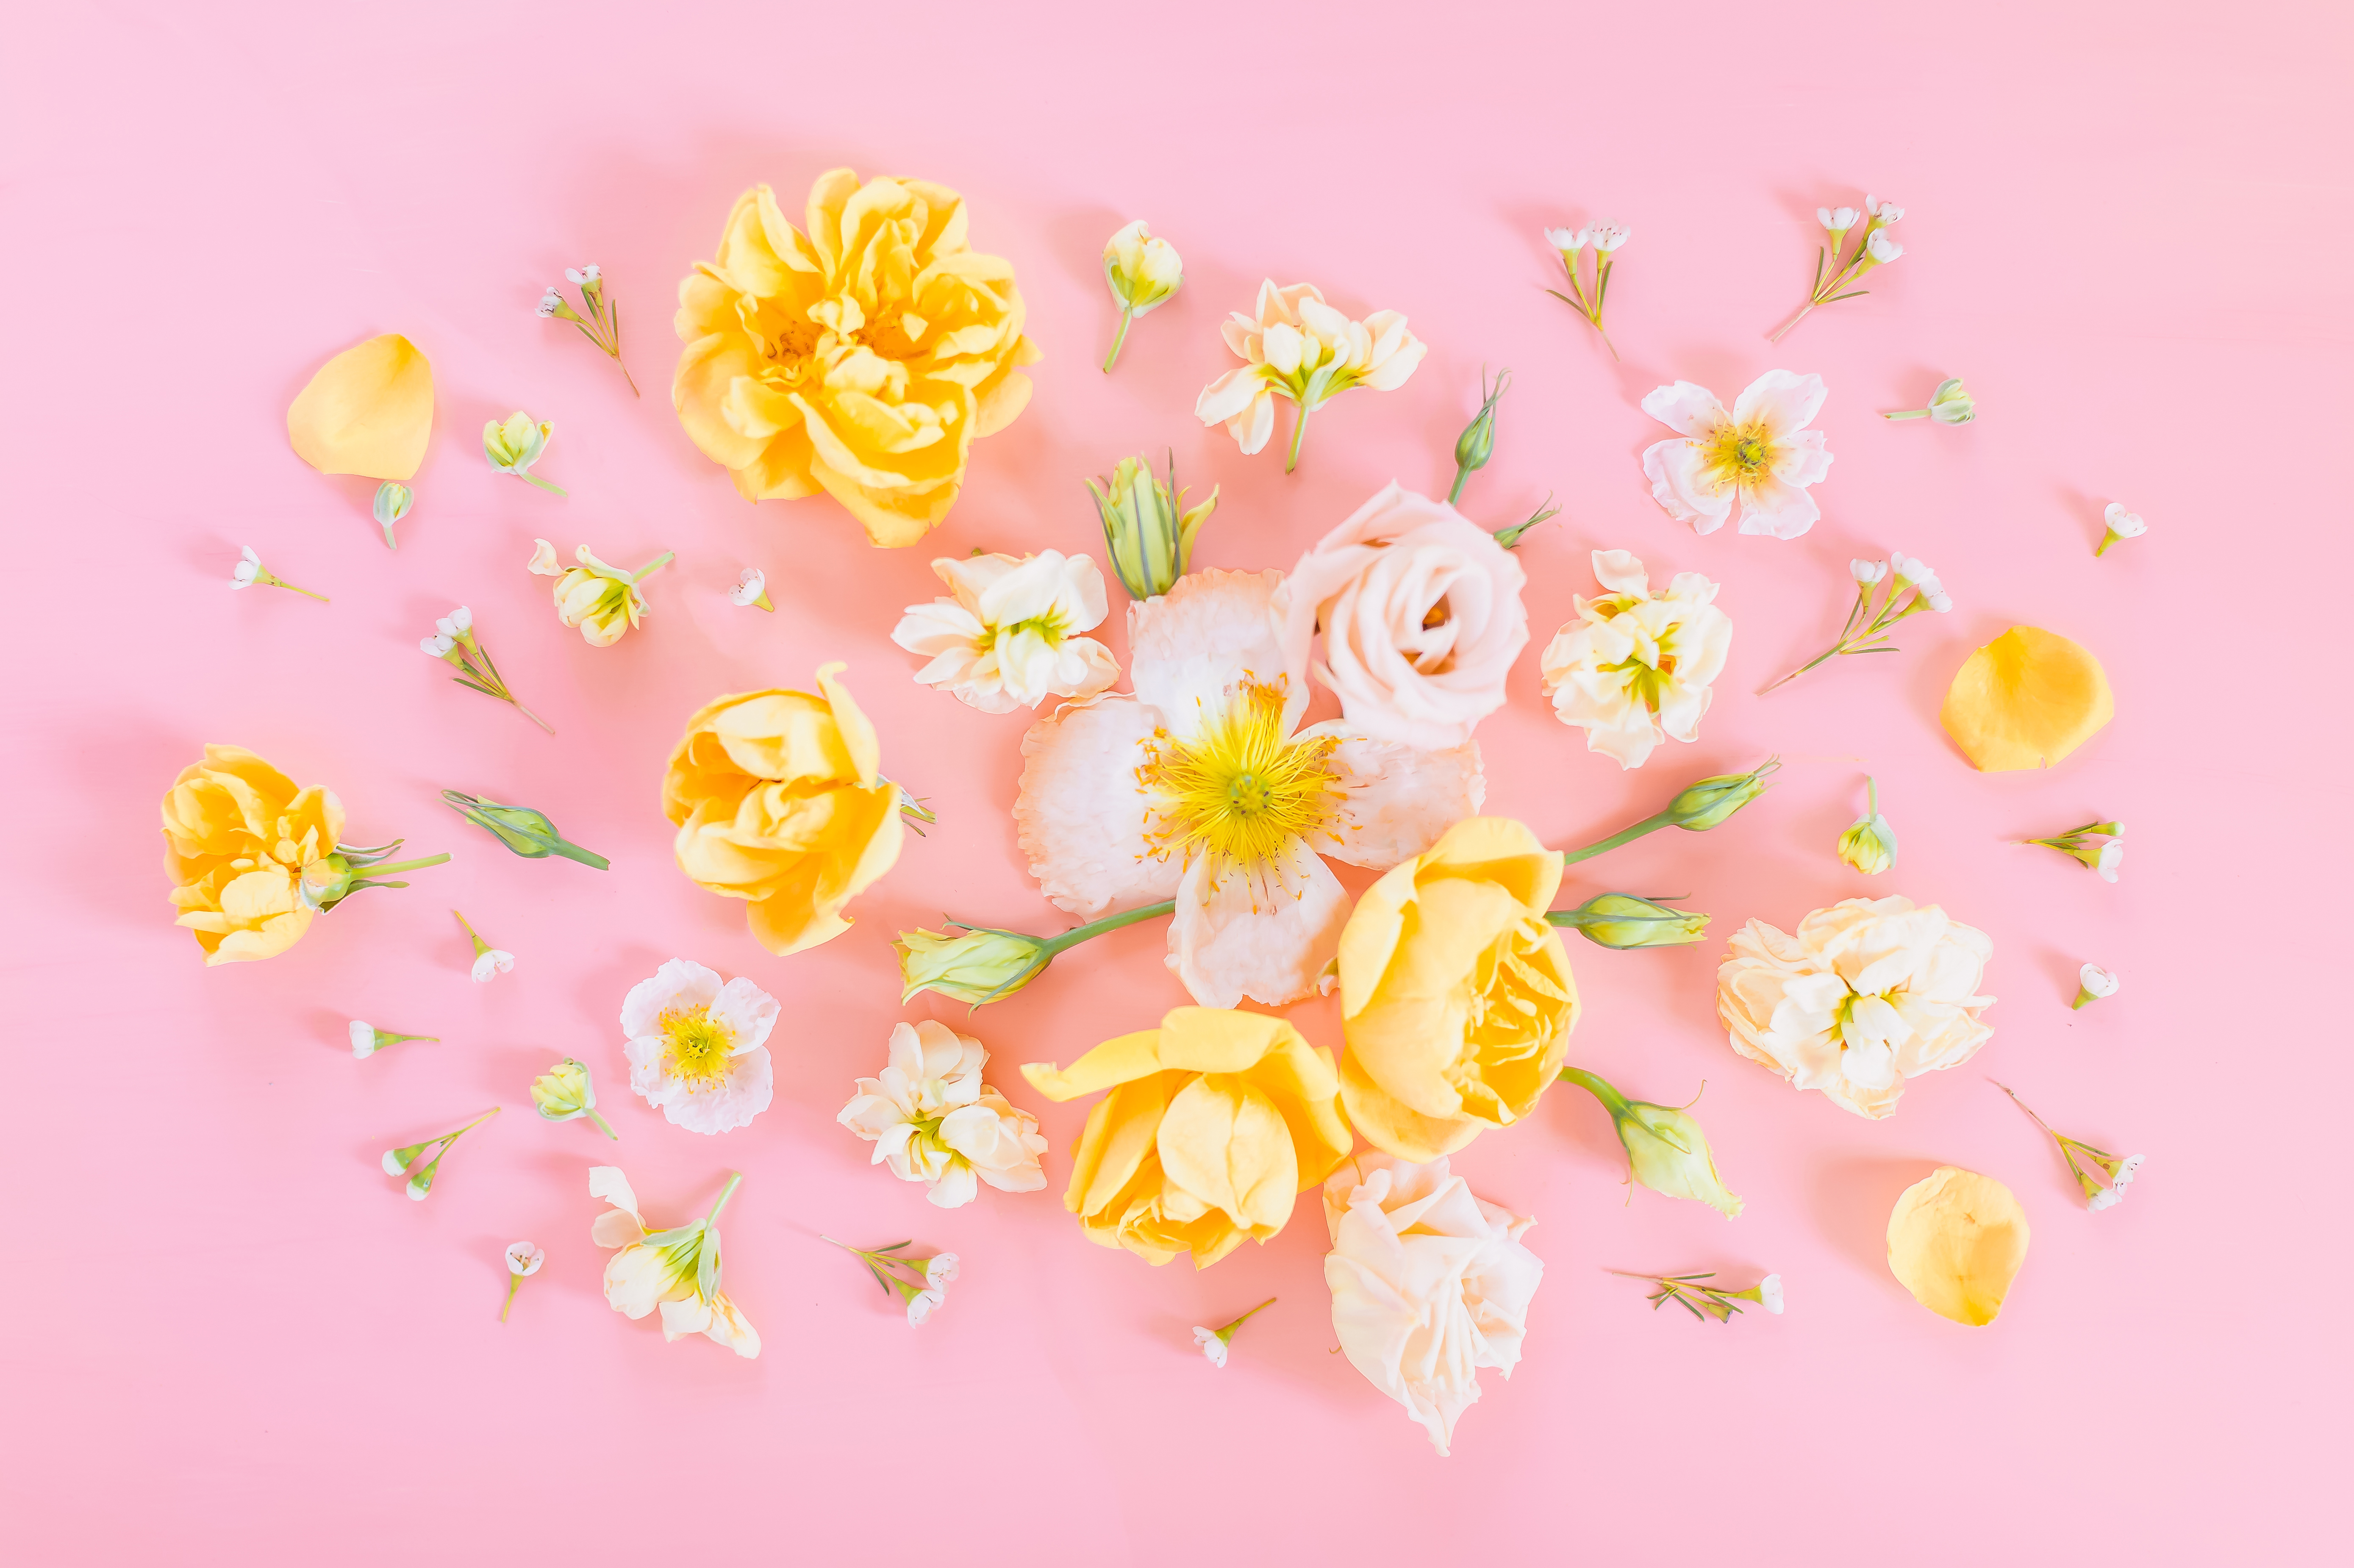 agosto sfondo del desktop,rosa,fiore,giallo,petalo,pianta